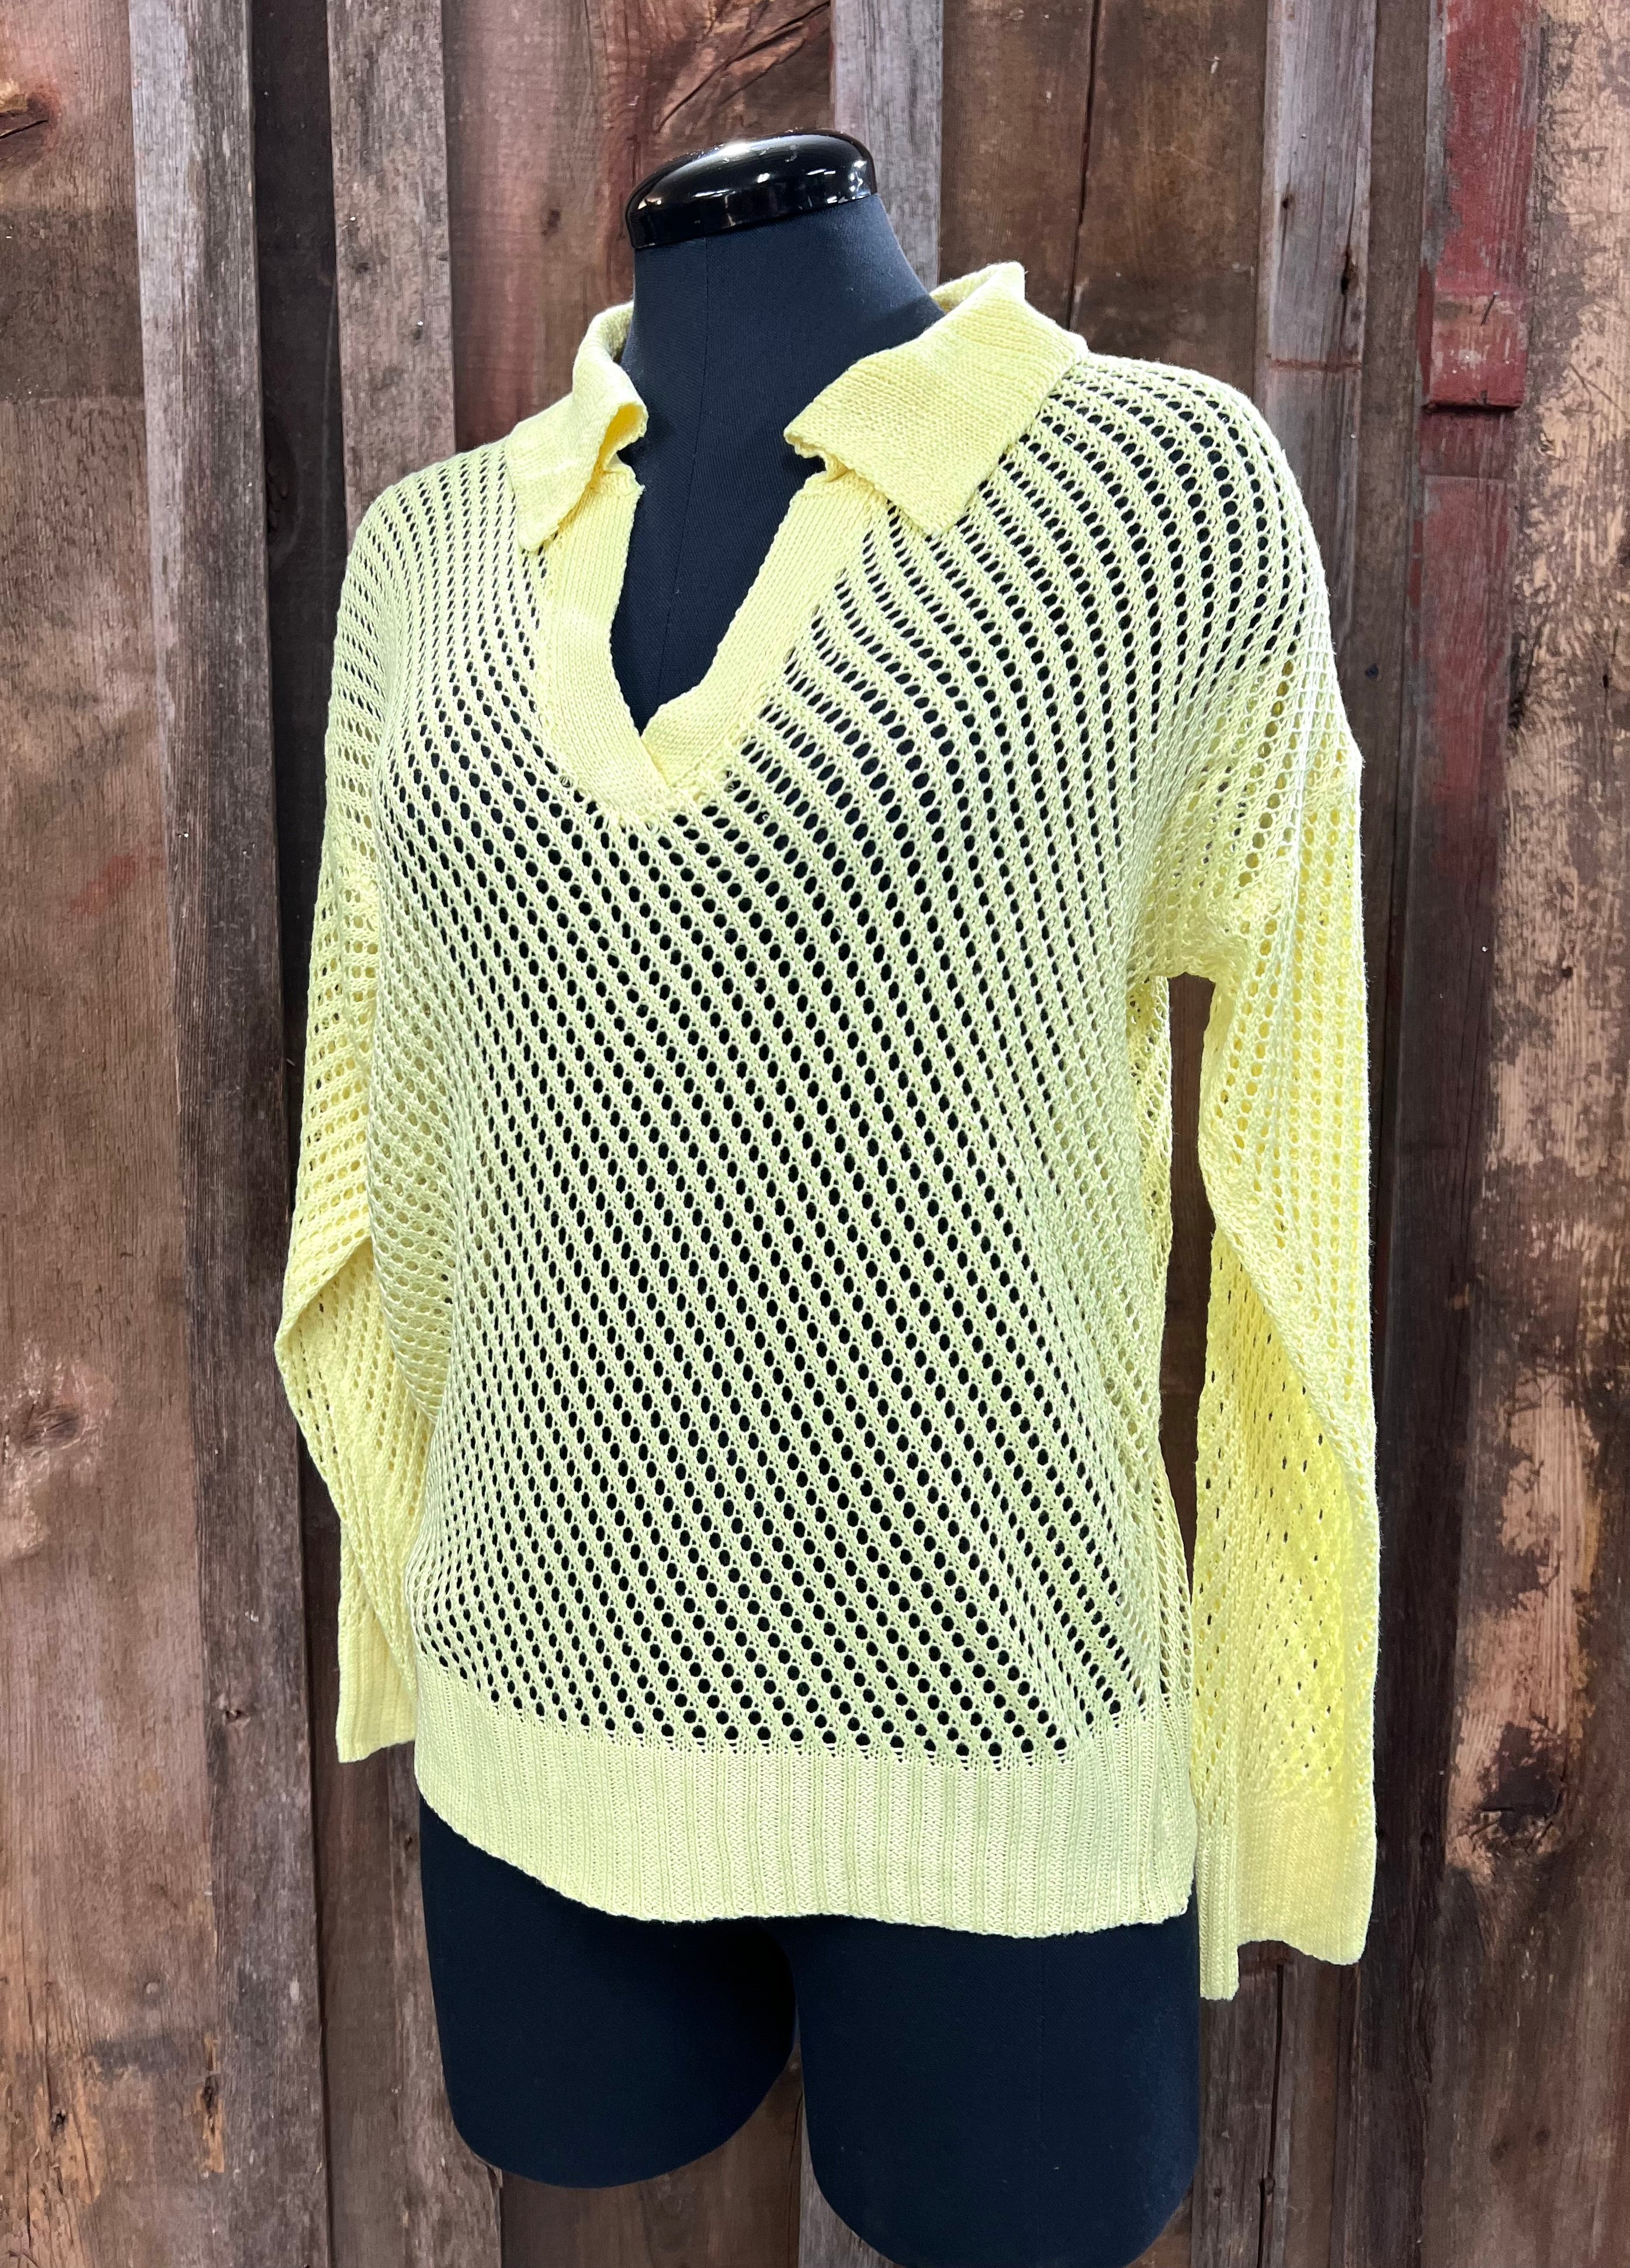 Neon Yellow Knit Sweater